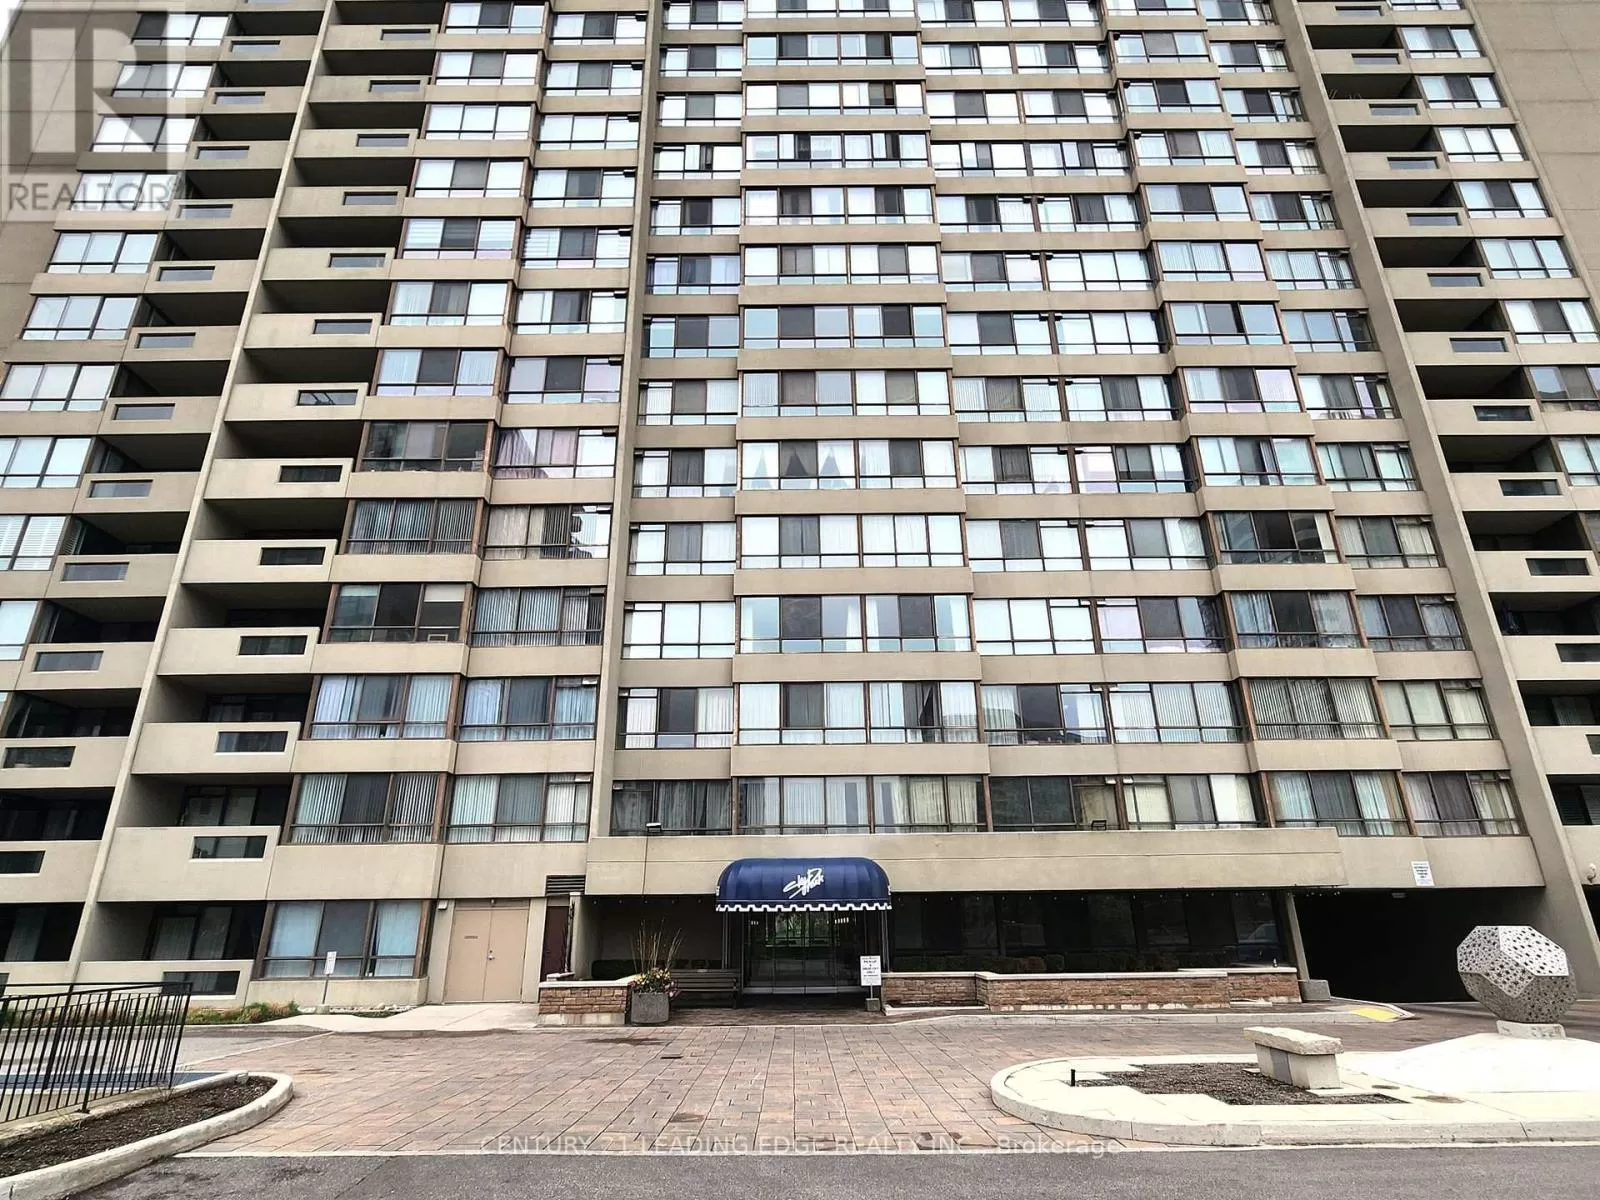 Apartment for rent: 304 - 255 Bamburgh Circle, Toronto, Ontario M1W 3T6